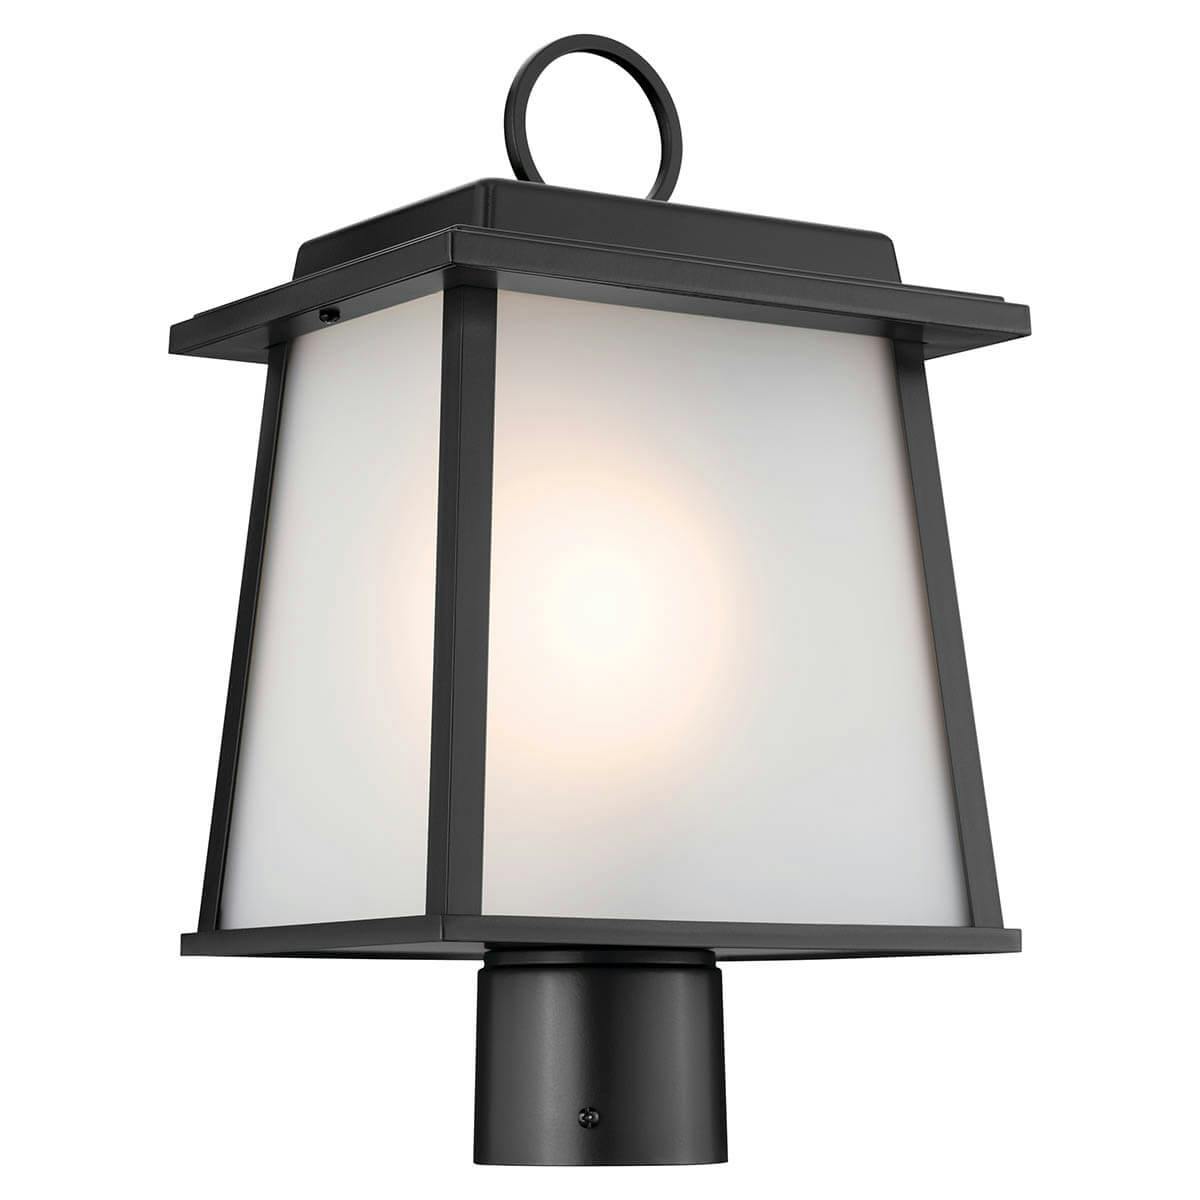 Noward 7.5" 1 Light Post Lantern Black on a white background